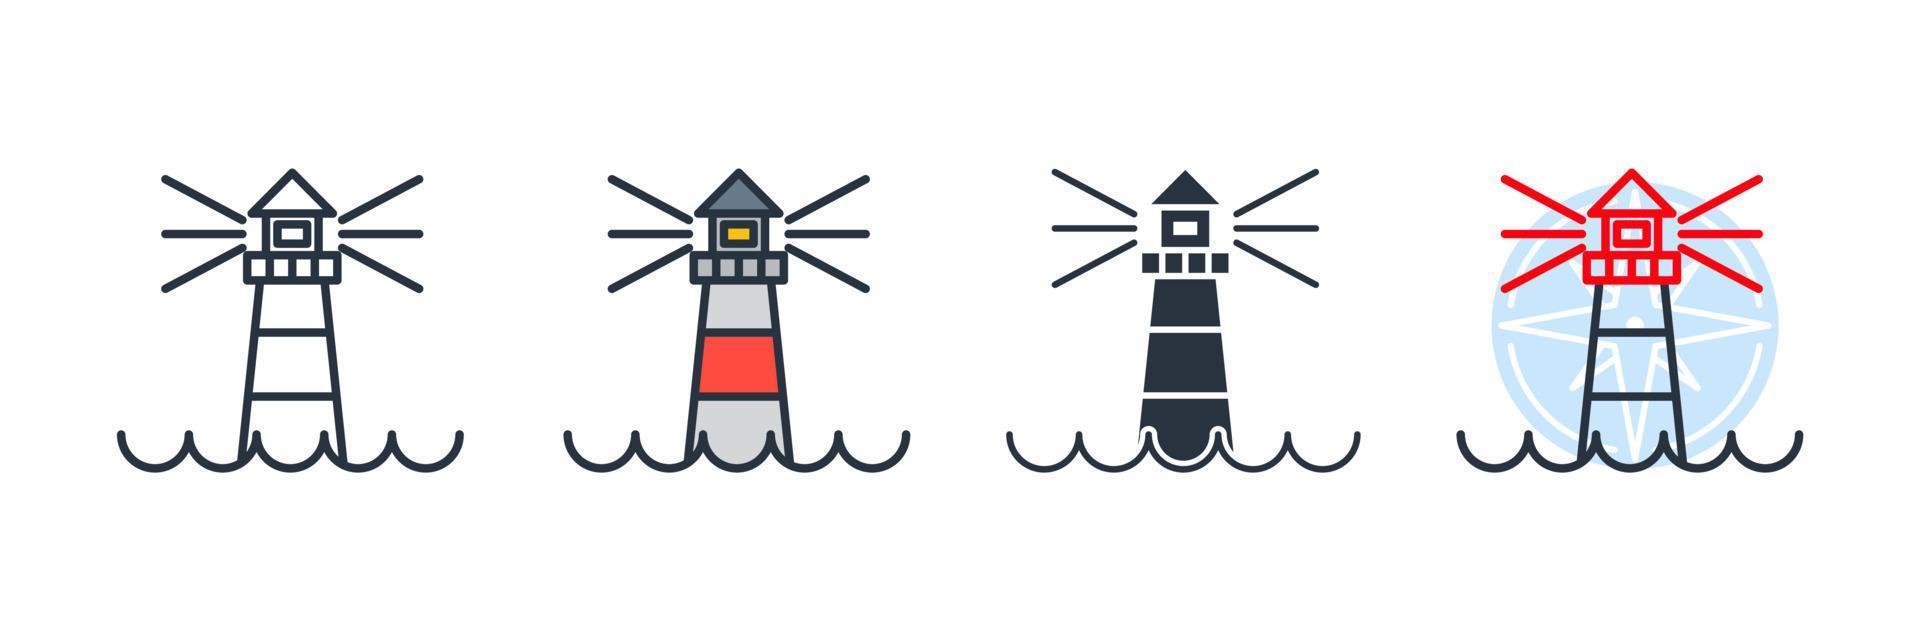 Leuchtturm-Symbol-Logo-Vektor-Illustration. Leuchtturm-Symbolvorlage für Grafik- und Webdesign-Sammlung vektor